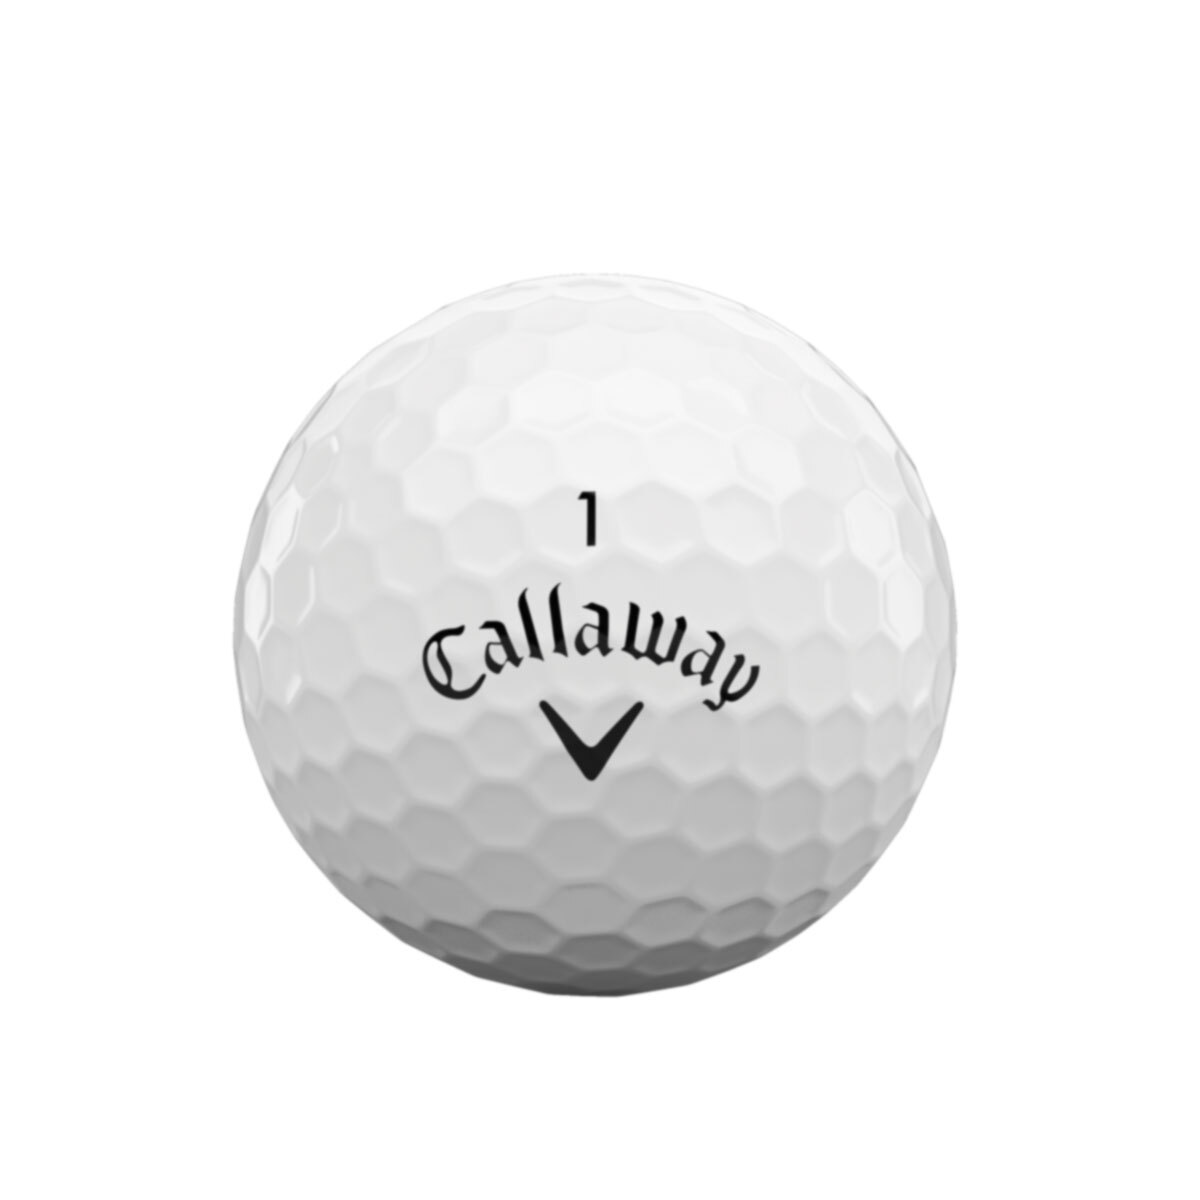 Callaway 2021 Hex balls 24 pack